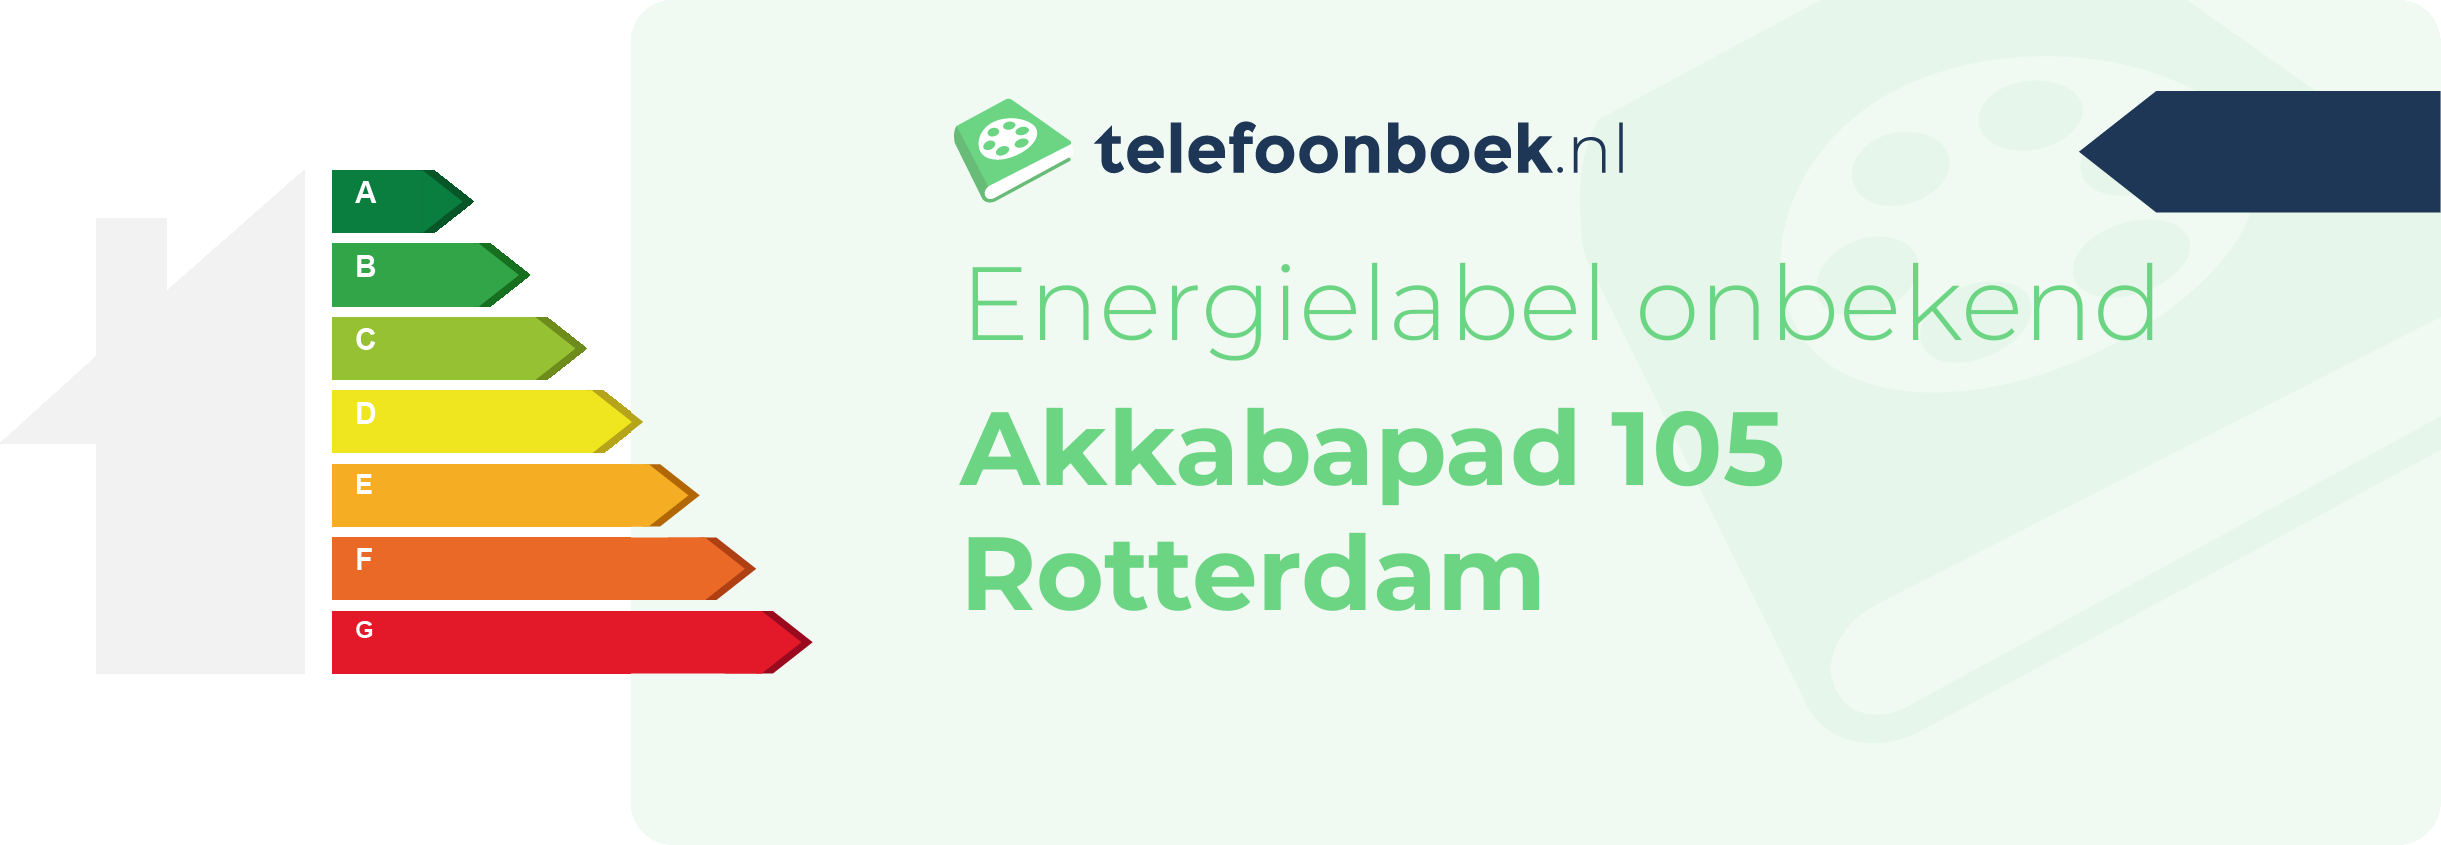 Energielabel Akkabapad 105 Rotterdam